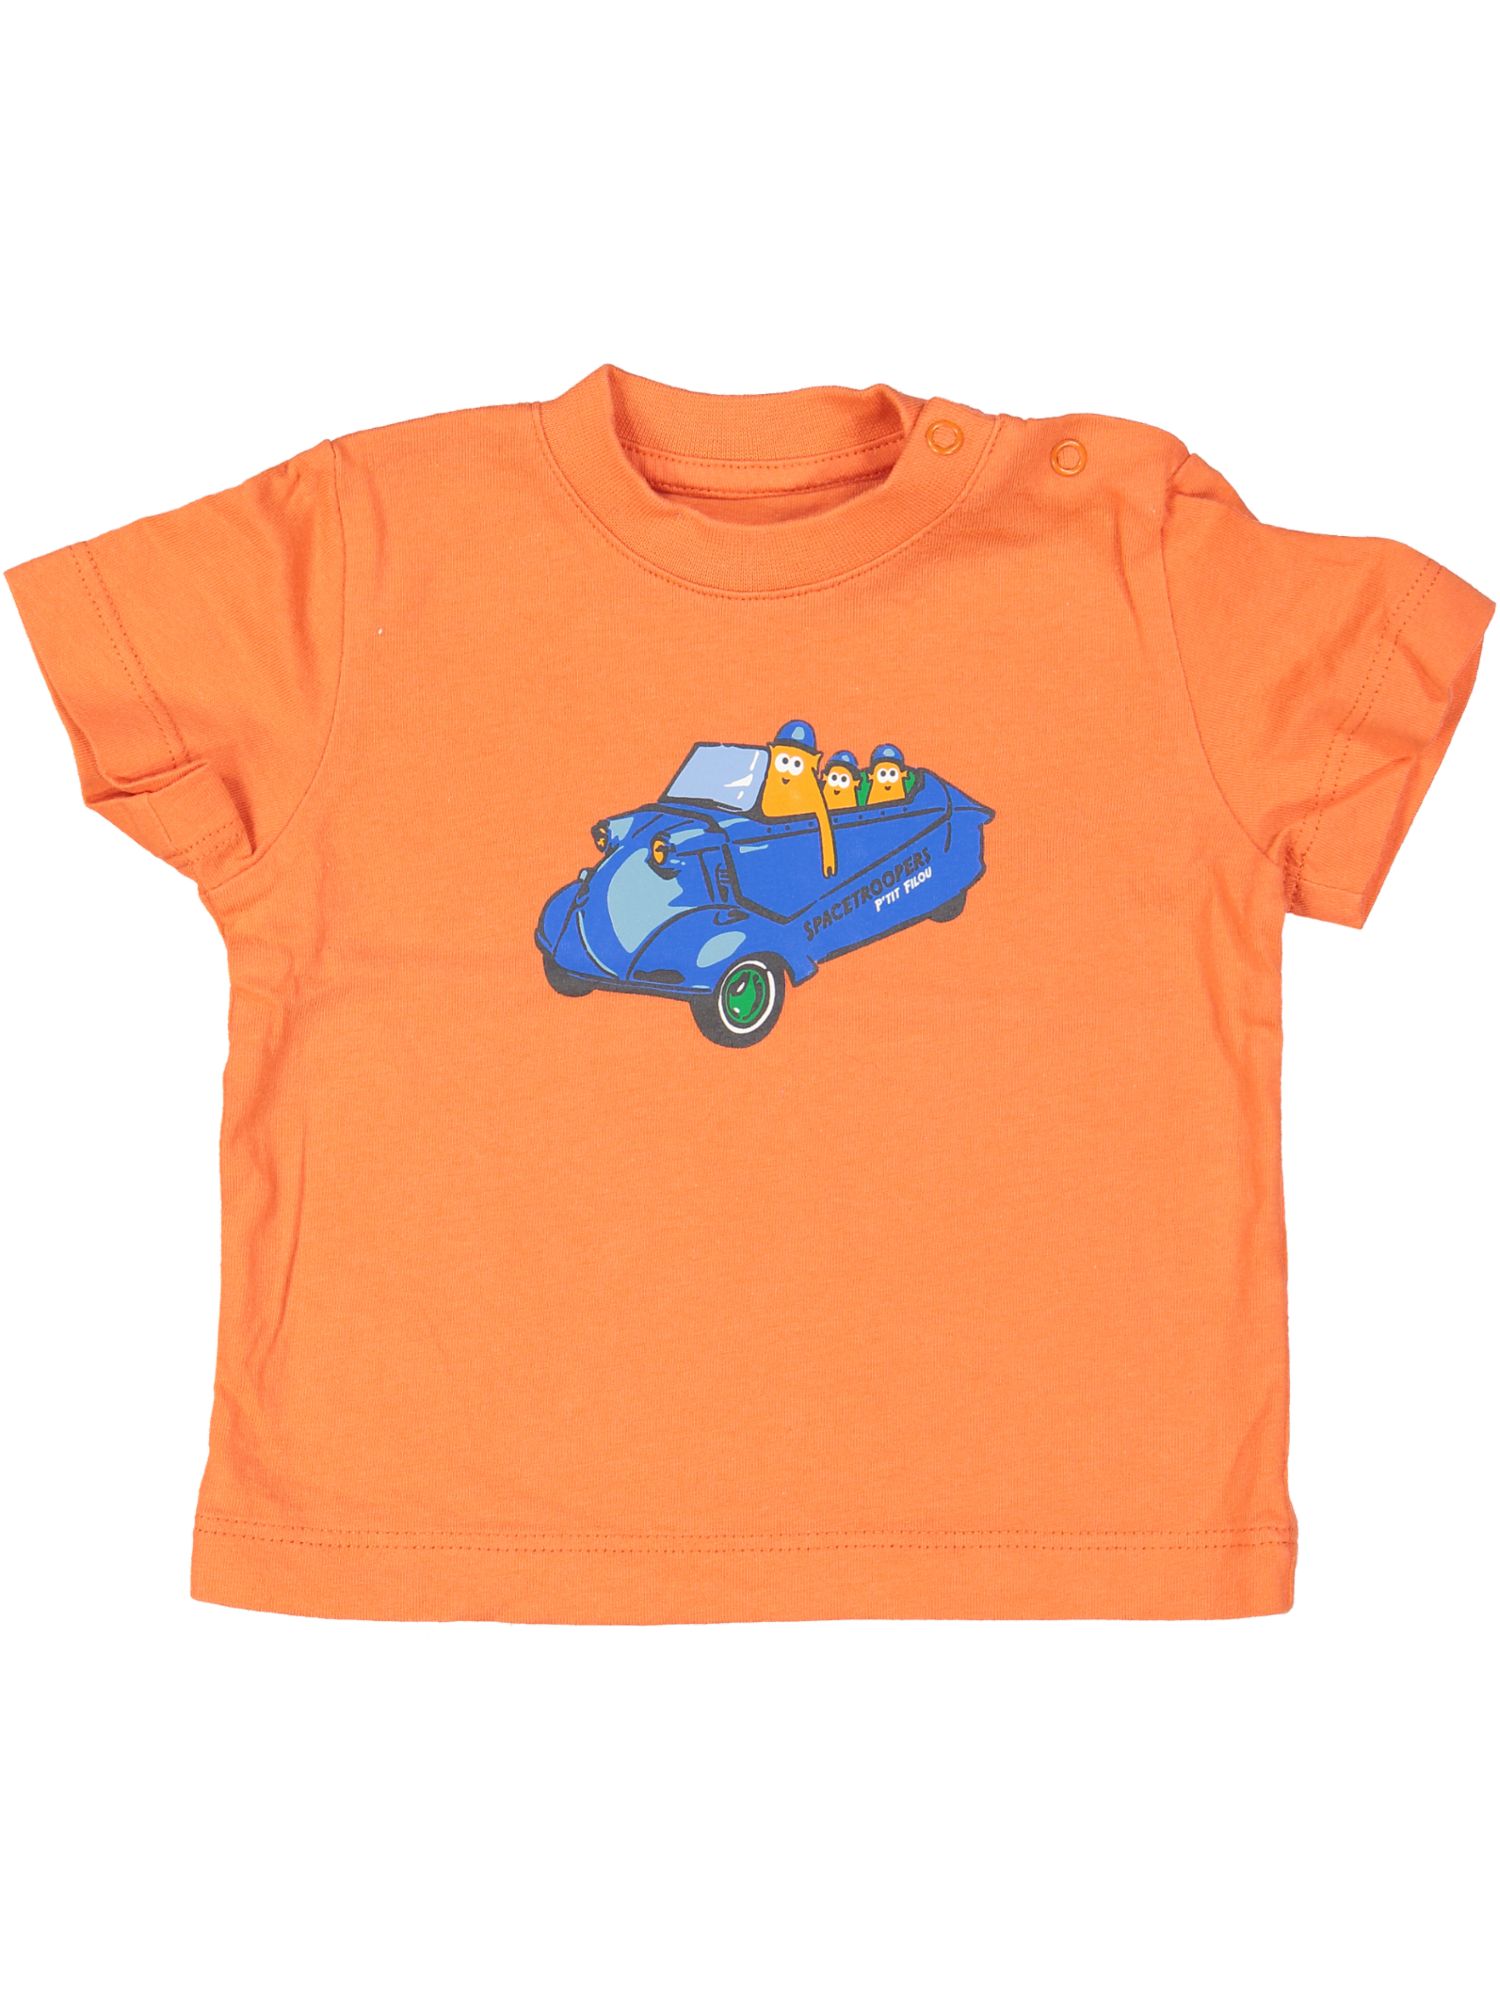 t-shirt oranje racewagen  06m .